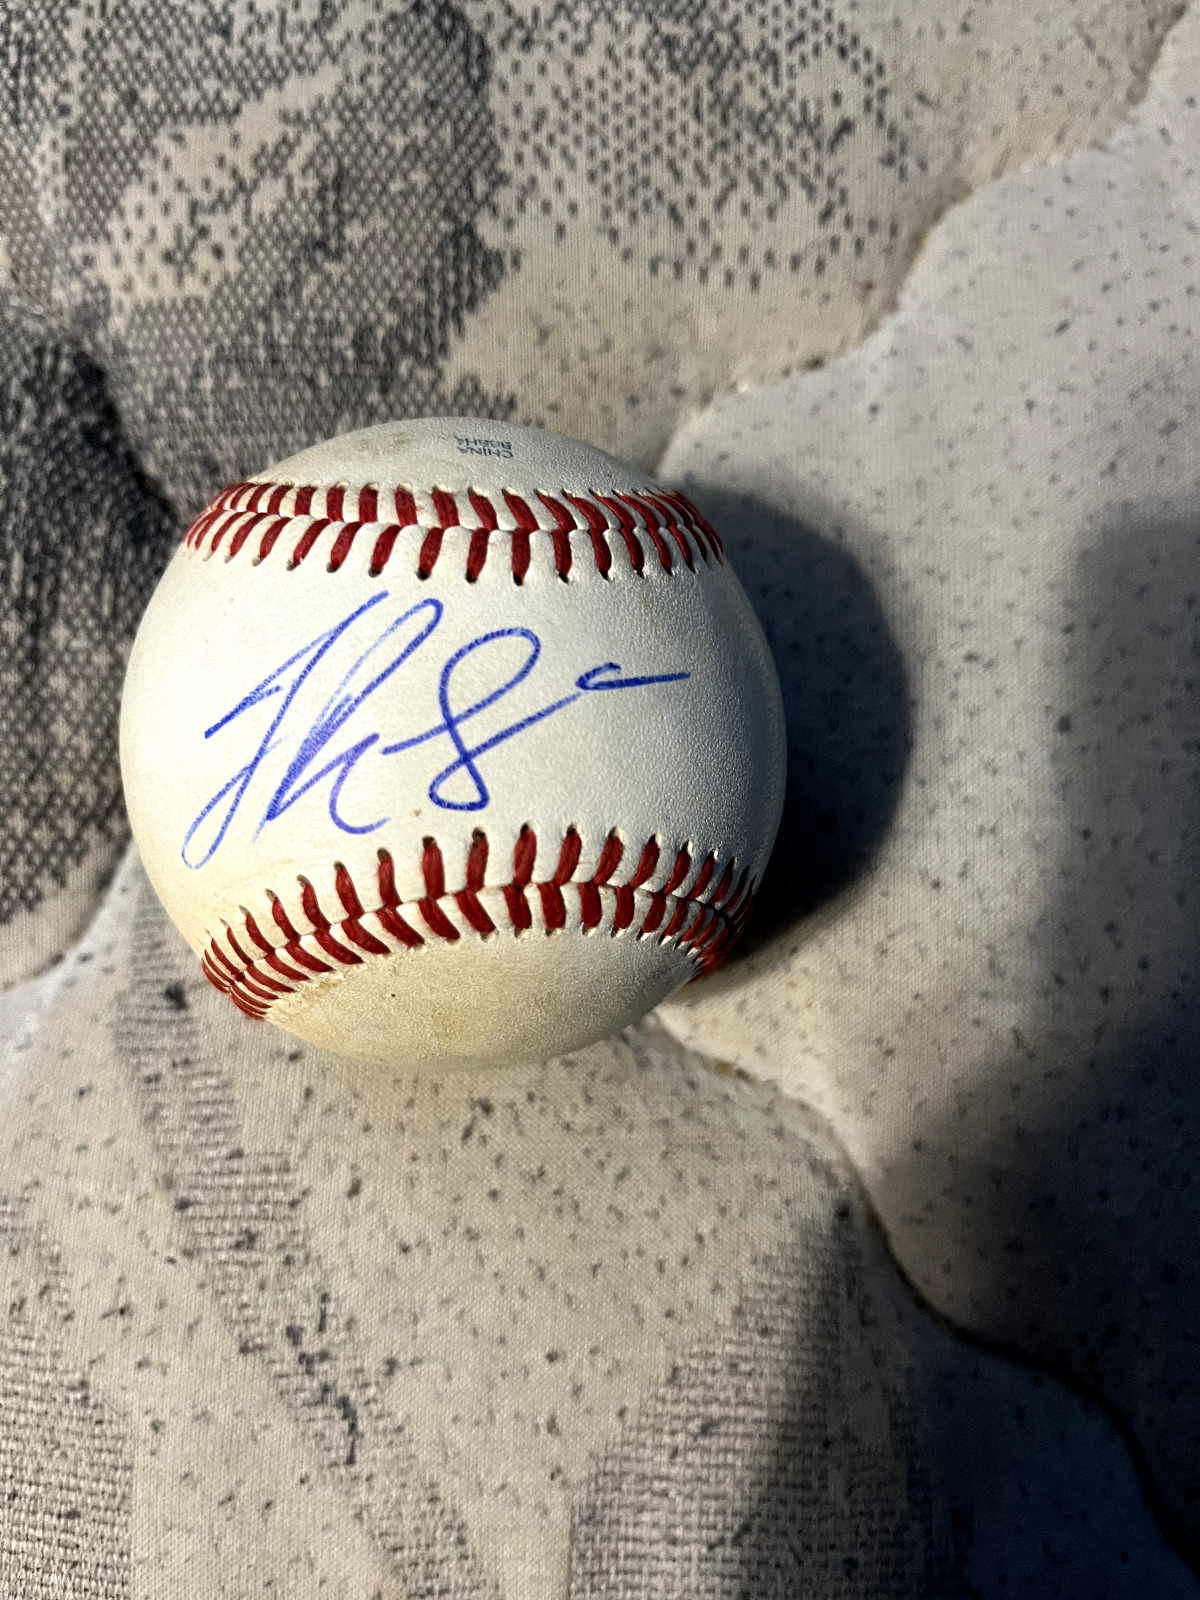 Detriot Tigers Jake Rodgers autograph baseball